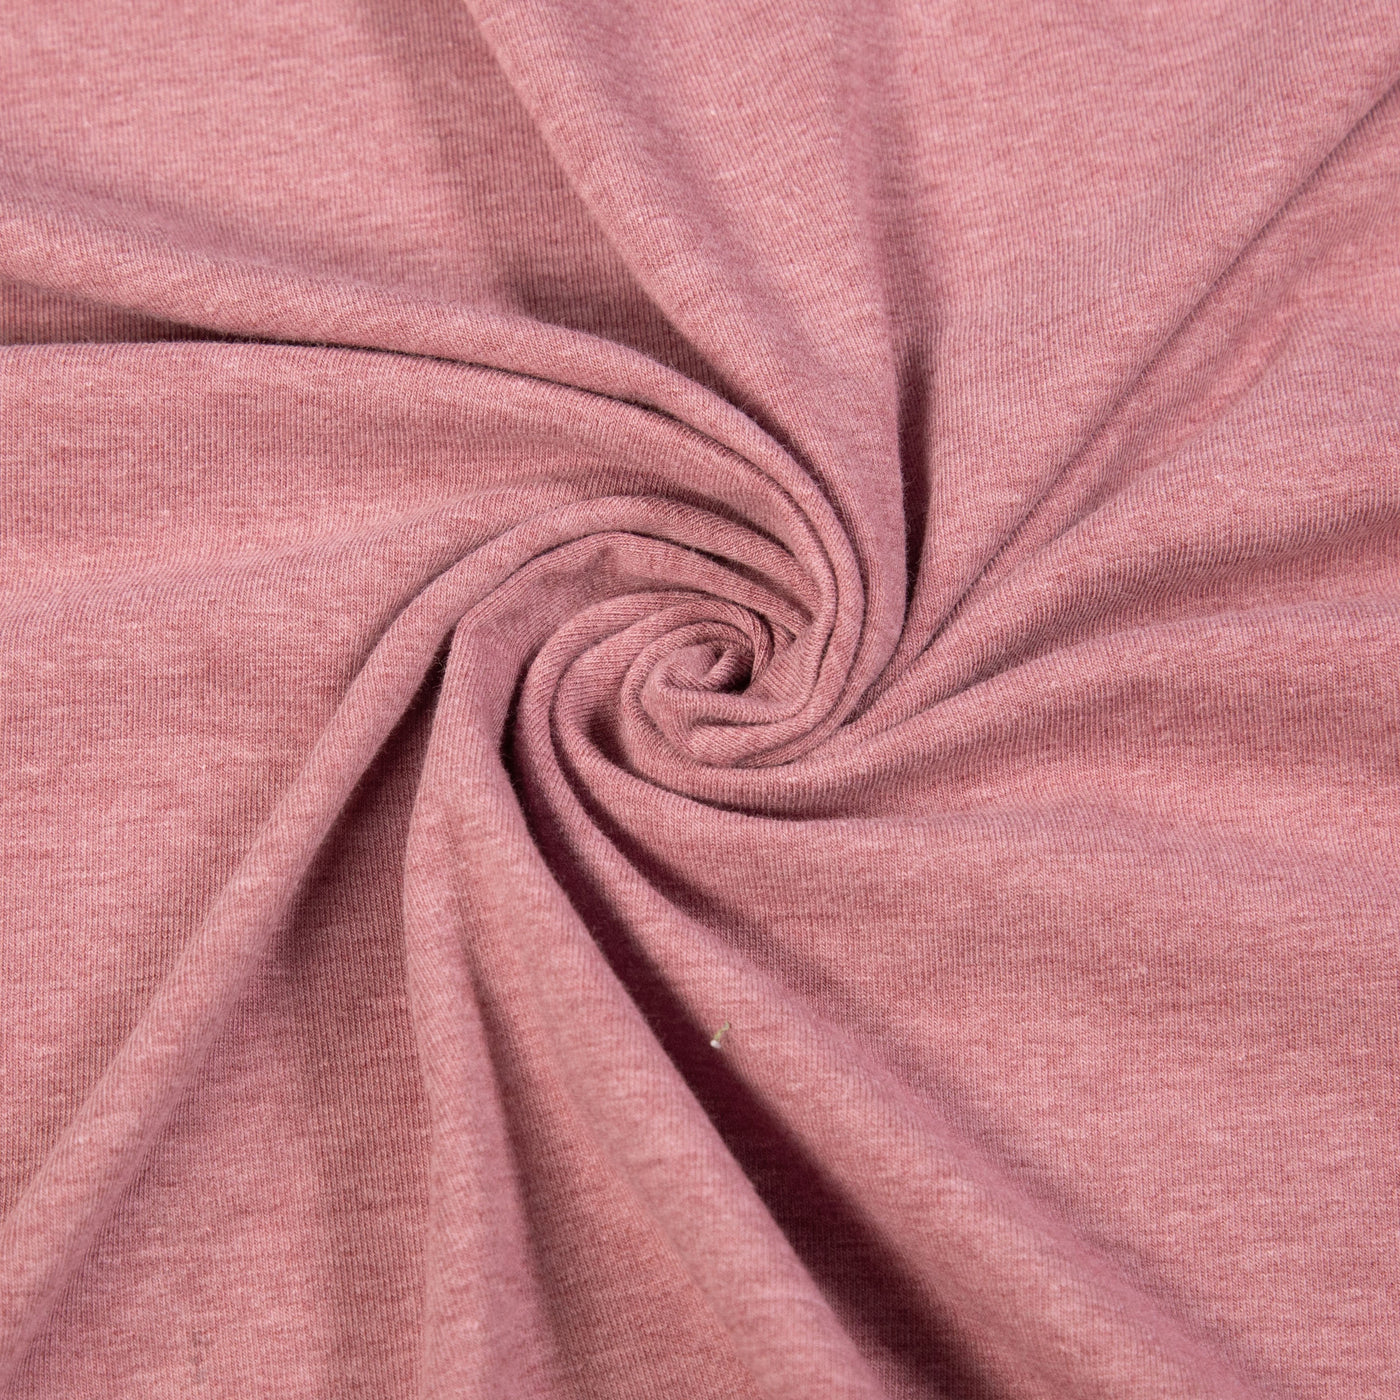 10oz Cotton Spandex Jersey Fabric | Marsala | Shop FabricLA.com